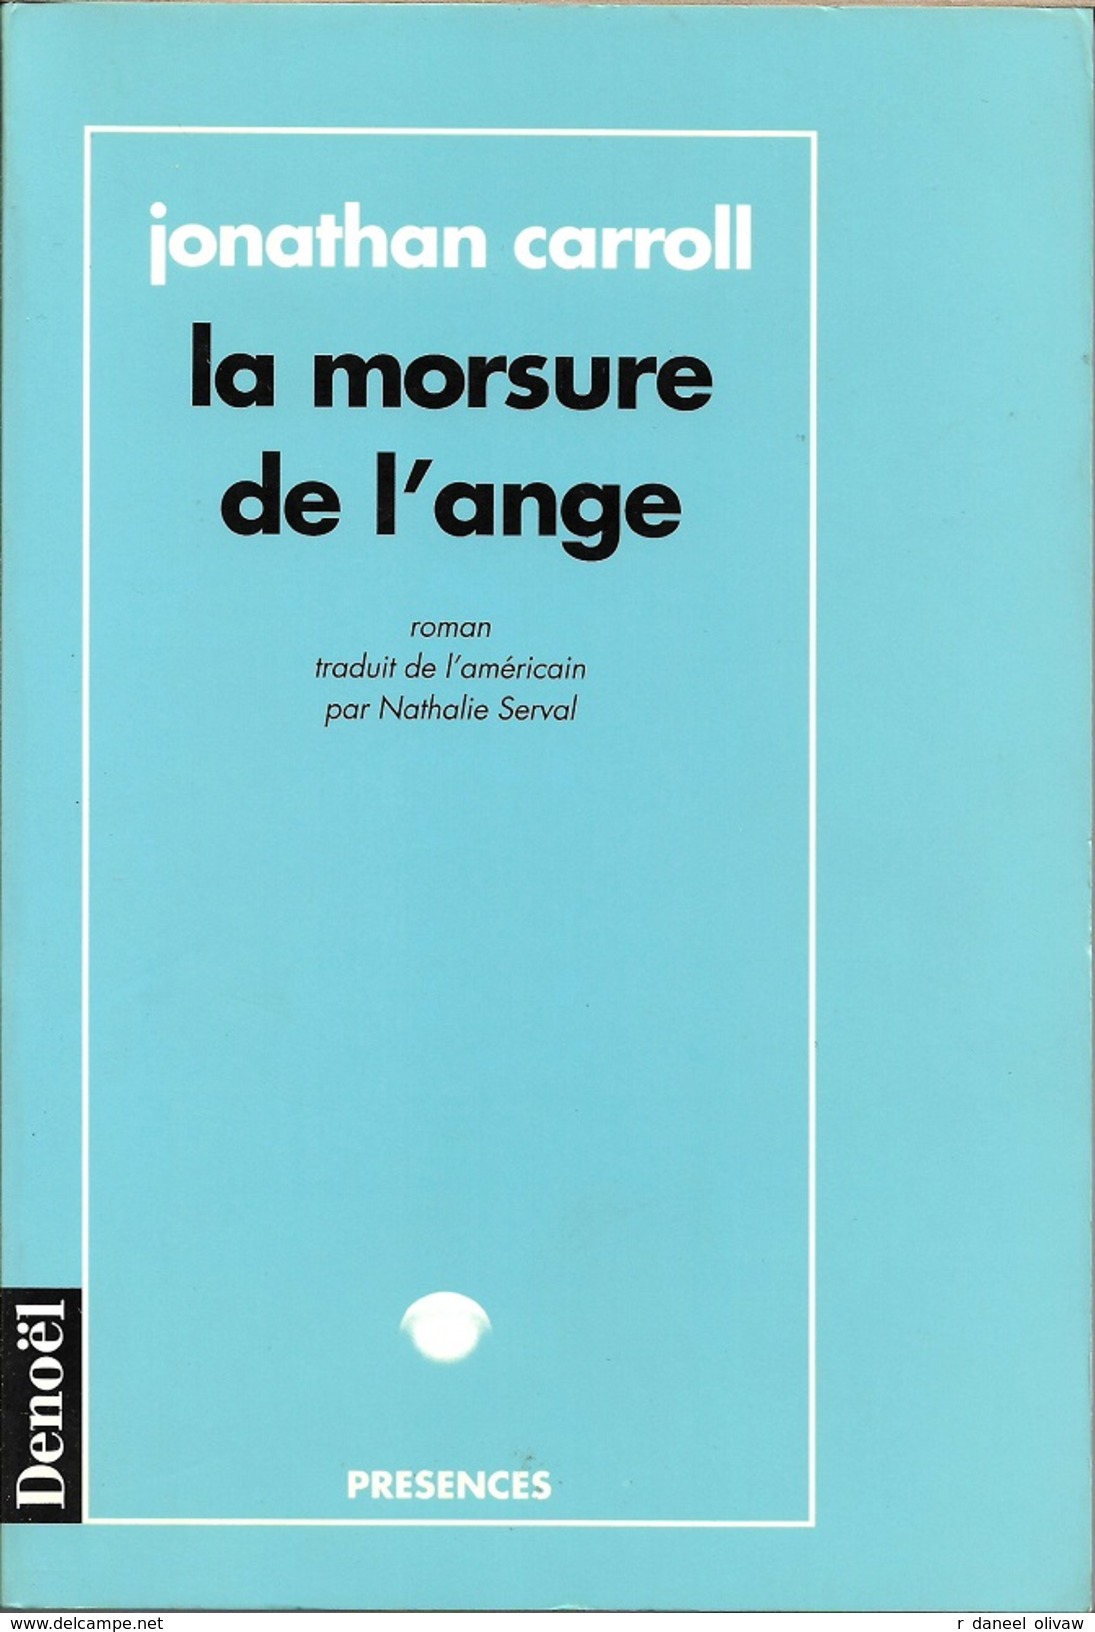 Présences - CARROLL, Jonathan - La Morsure De L'ange (TBE) - Denoël